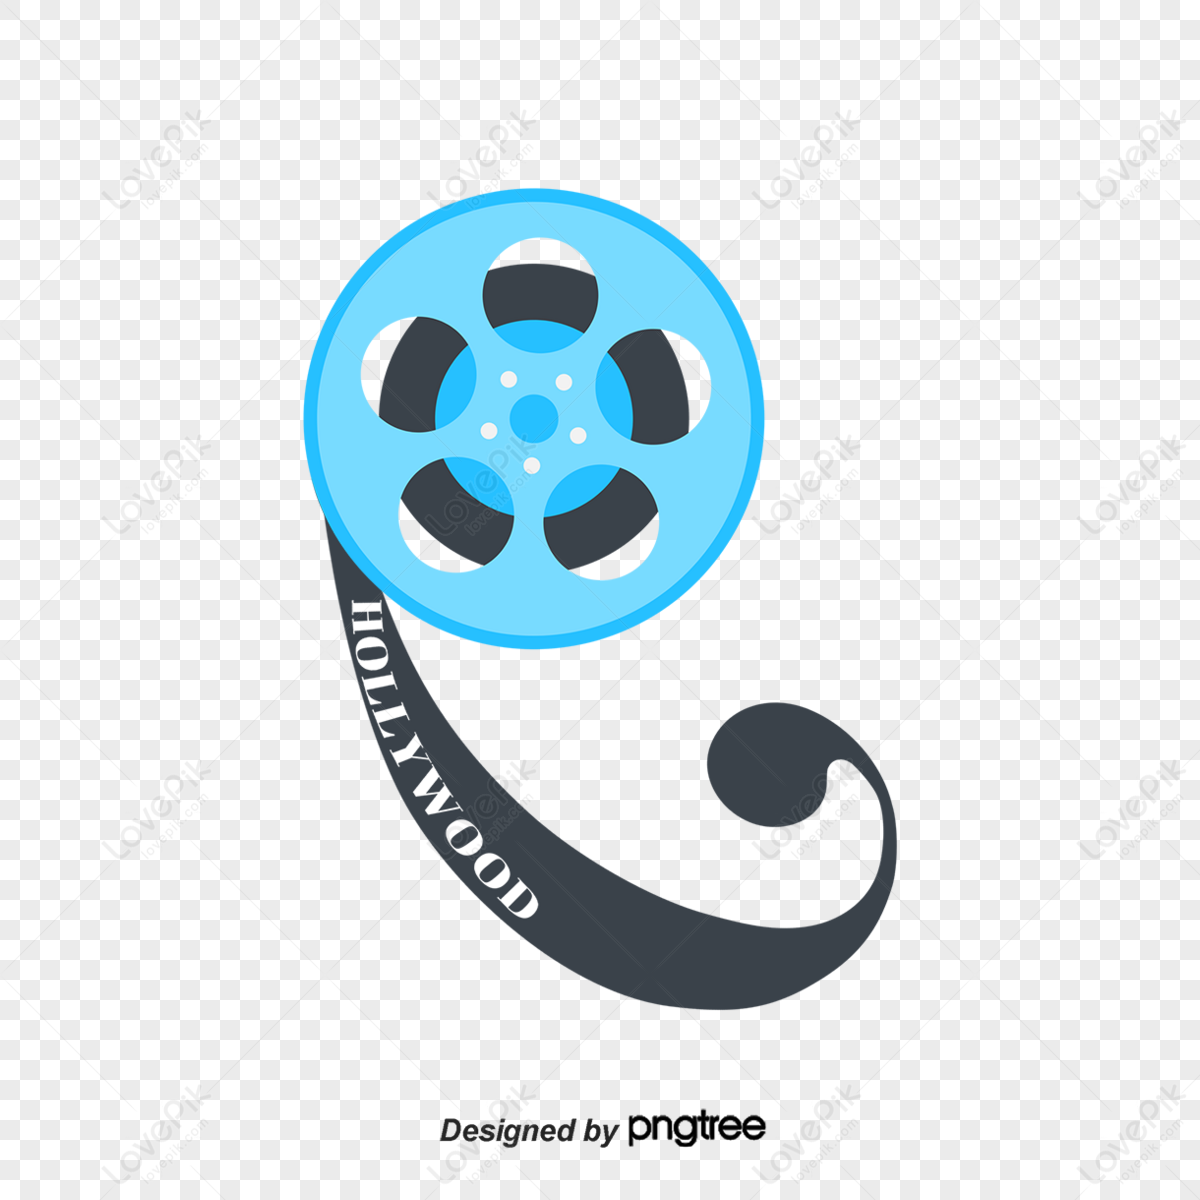 Film Reel Images, Movie Reel Transparent PNG Free Download - Free Transparent  PNG Logos